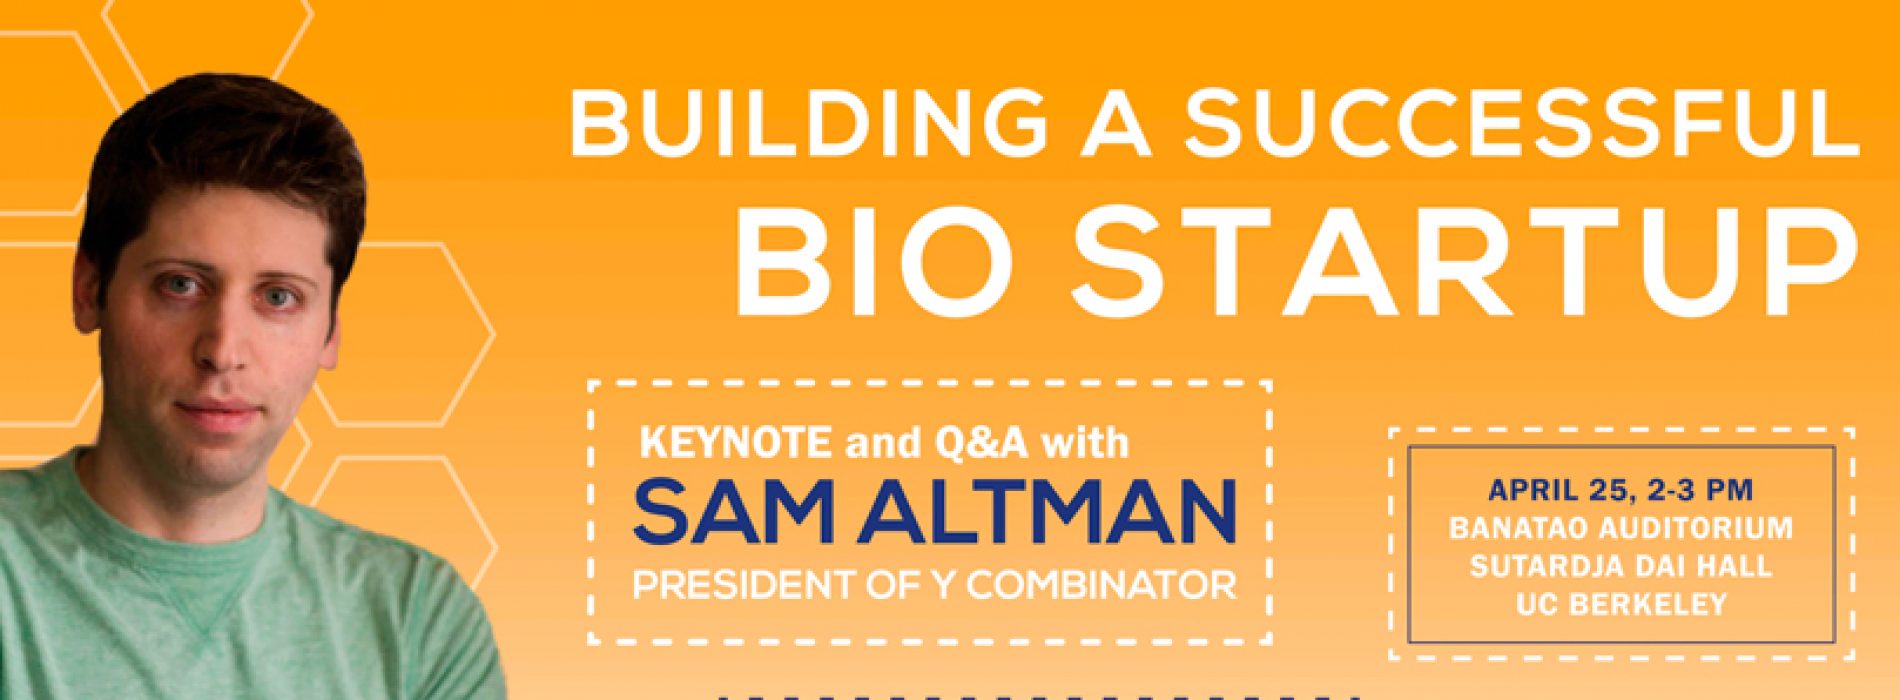 Building a Successful Startup Bio: Keynote by Y Combinator President Sam Altman